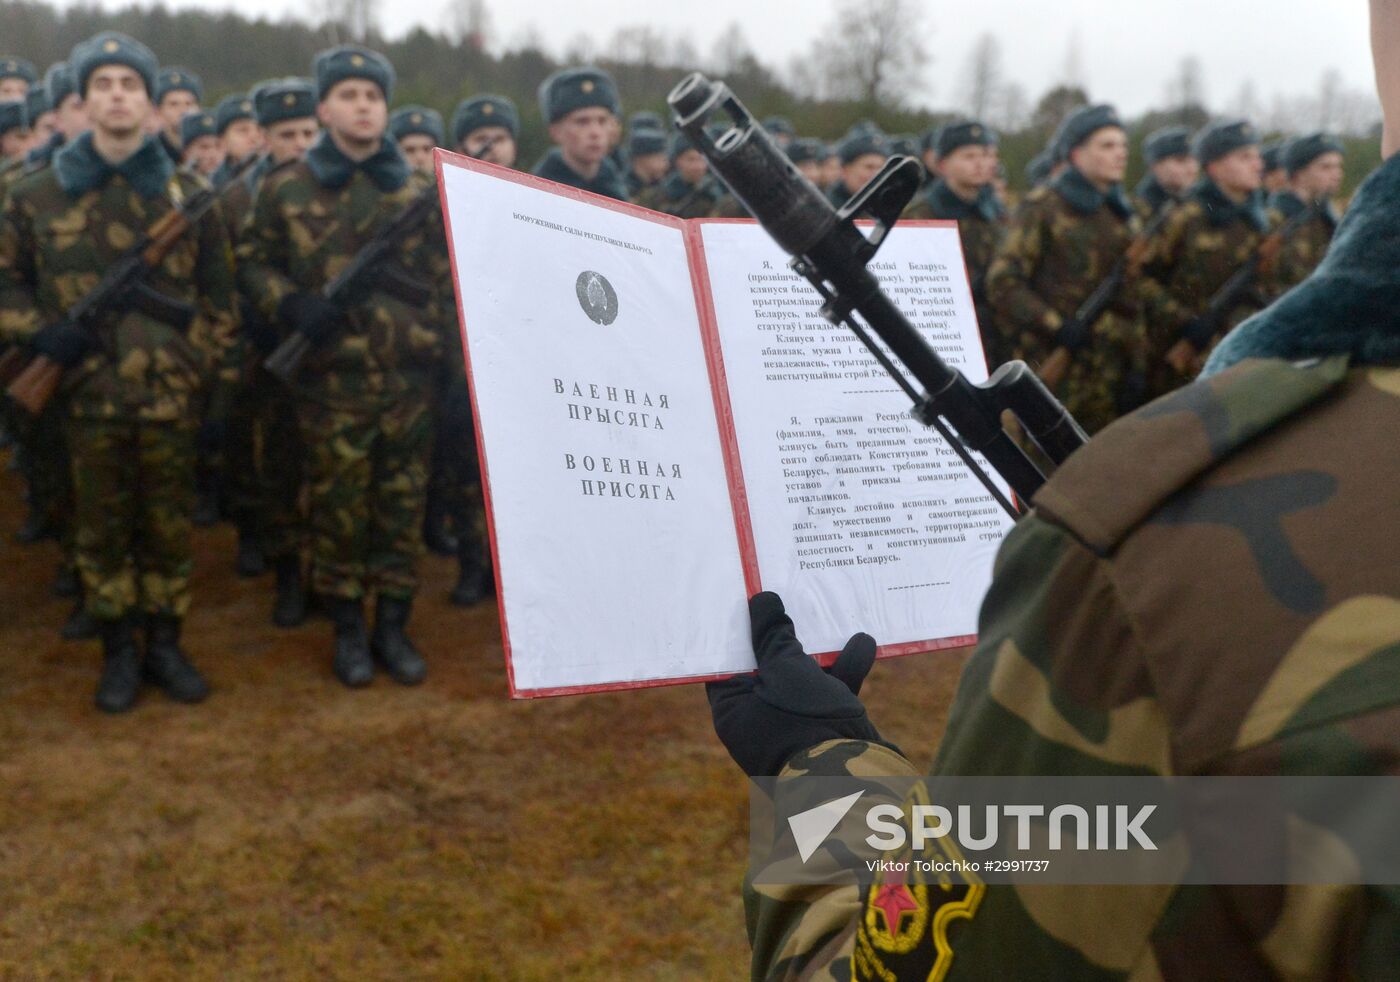 Ceremony of taking the oath in Belarus